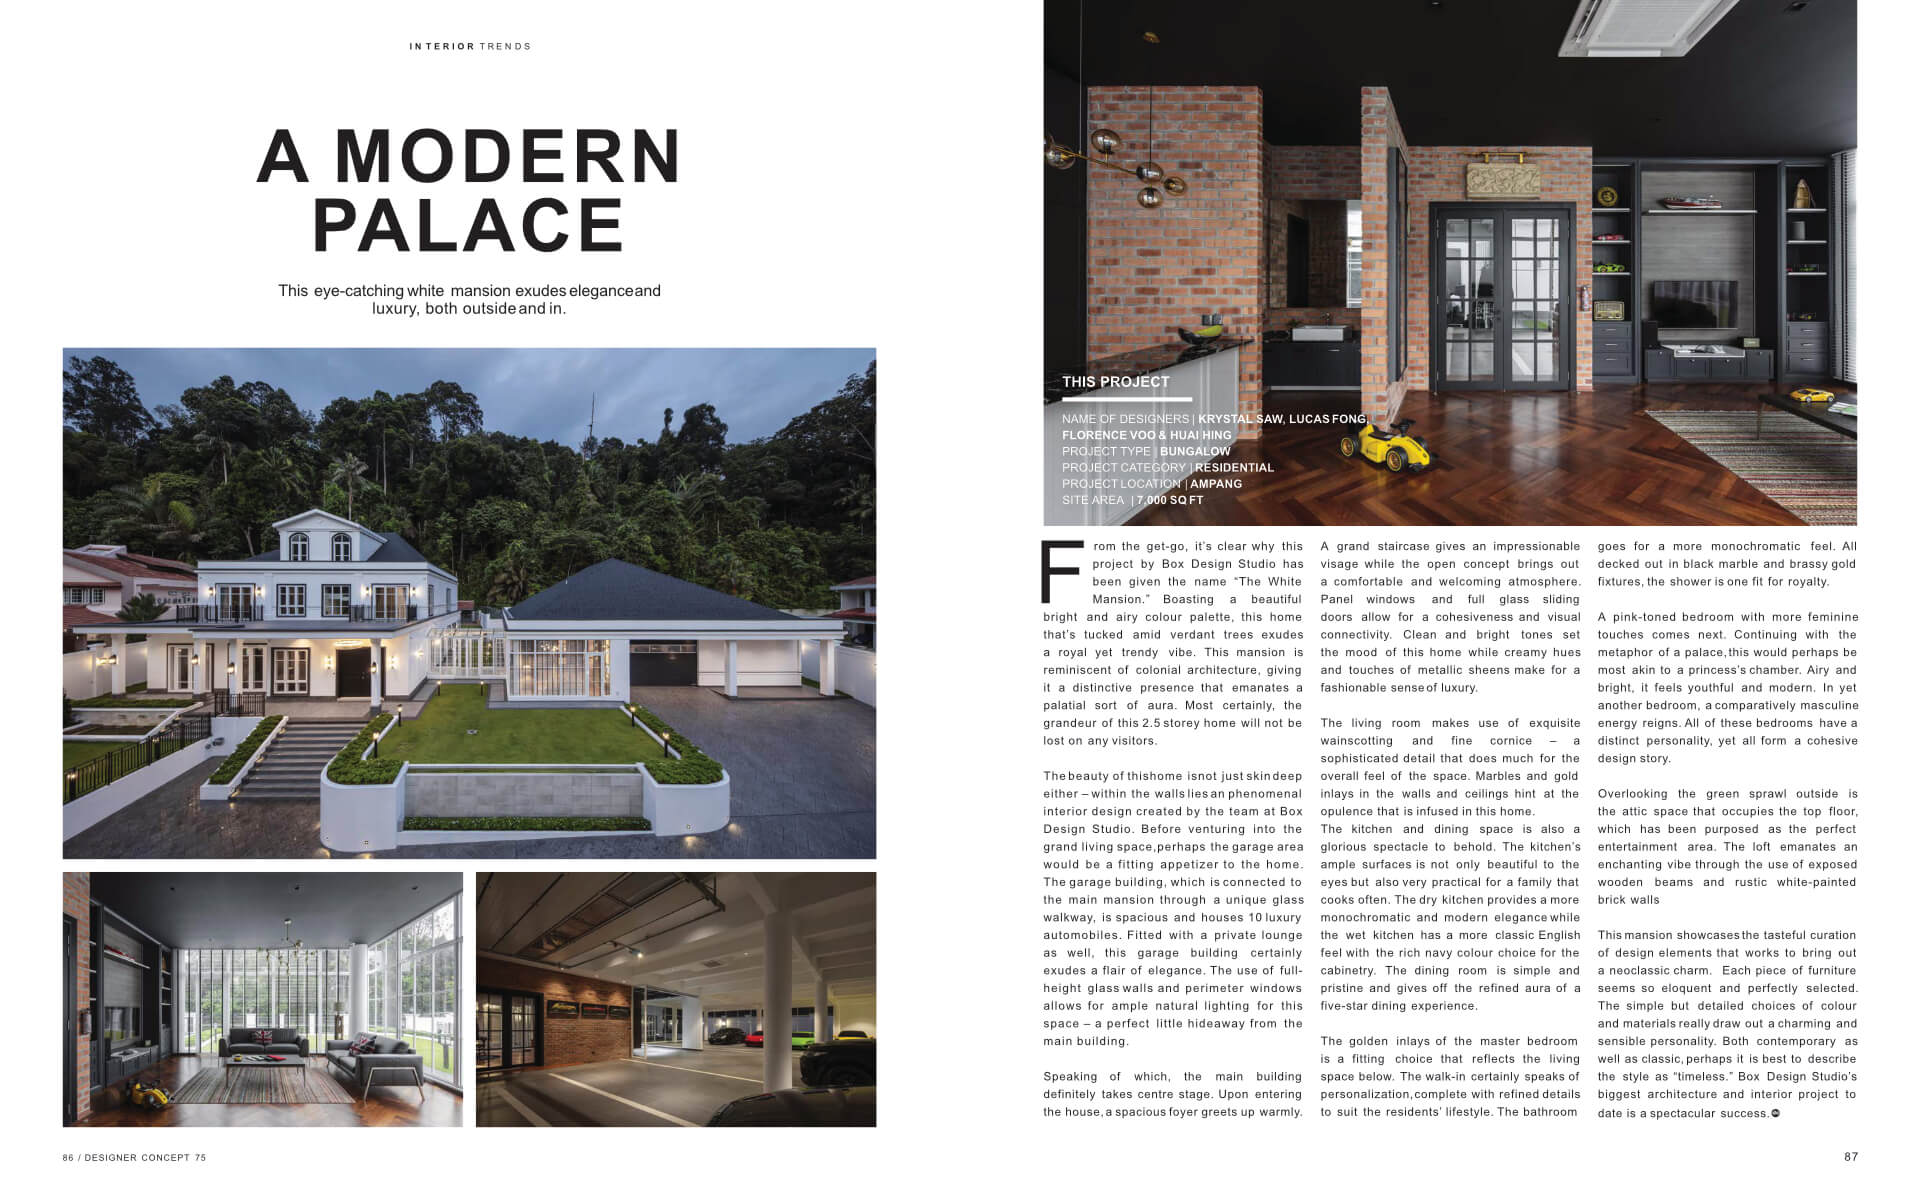 A MODERN PALACE, Design Concept 75